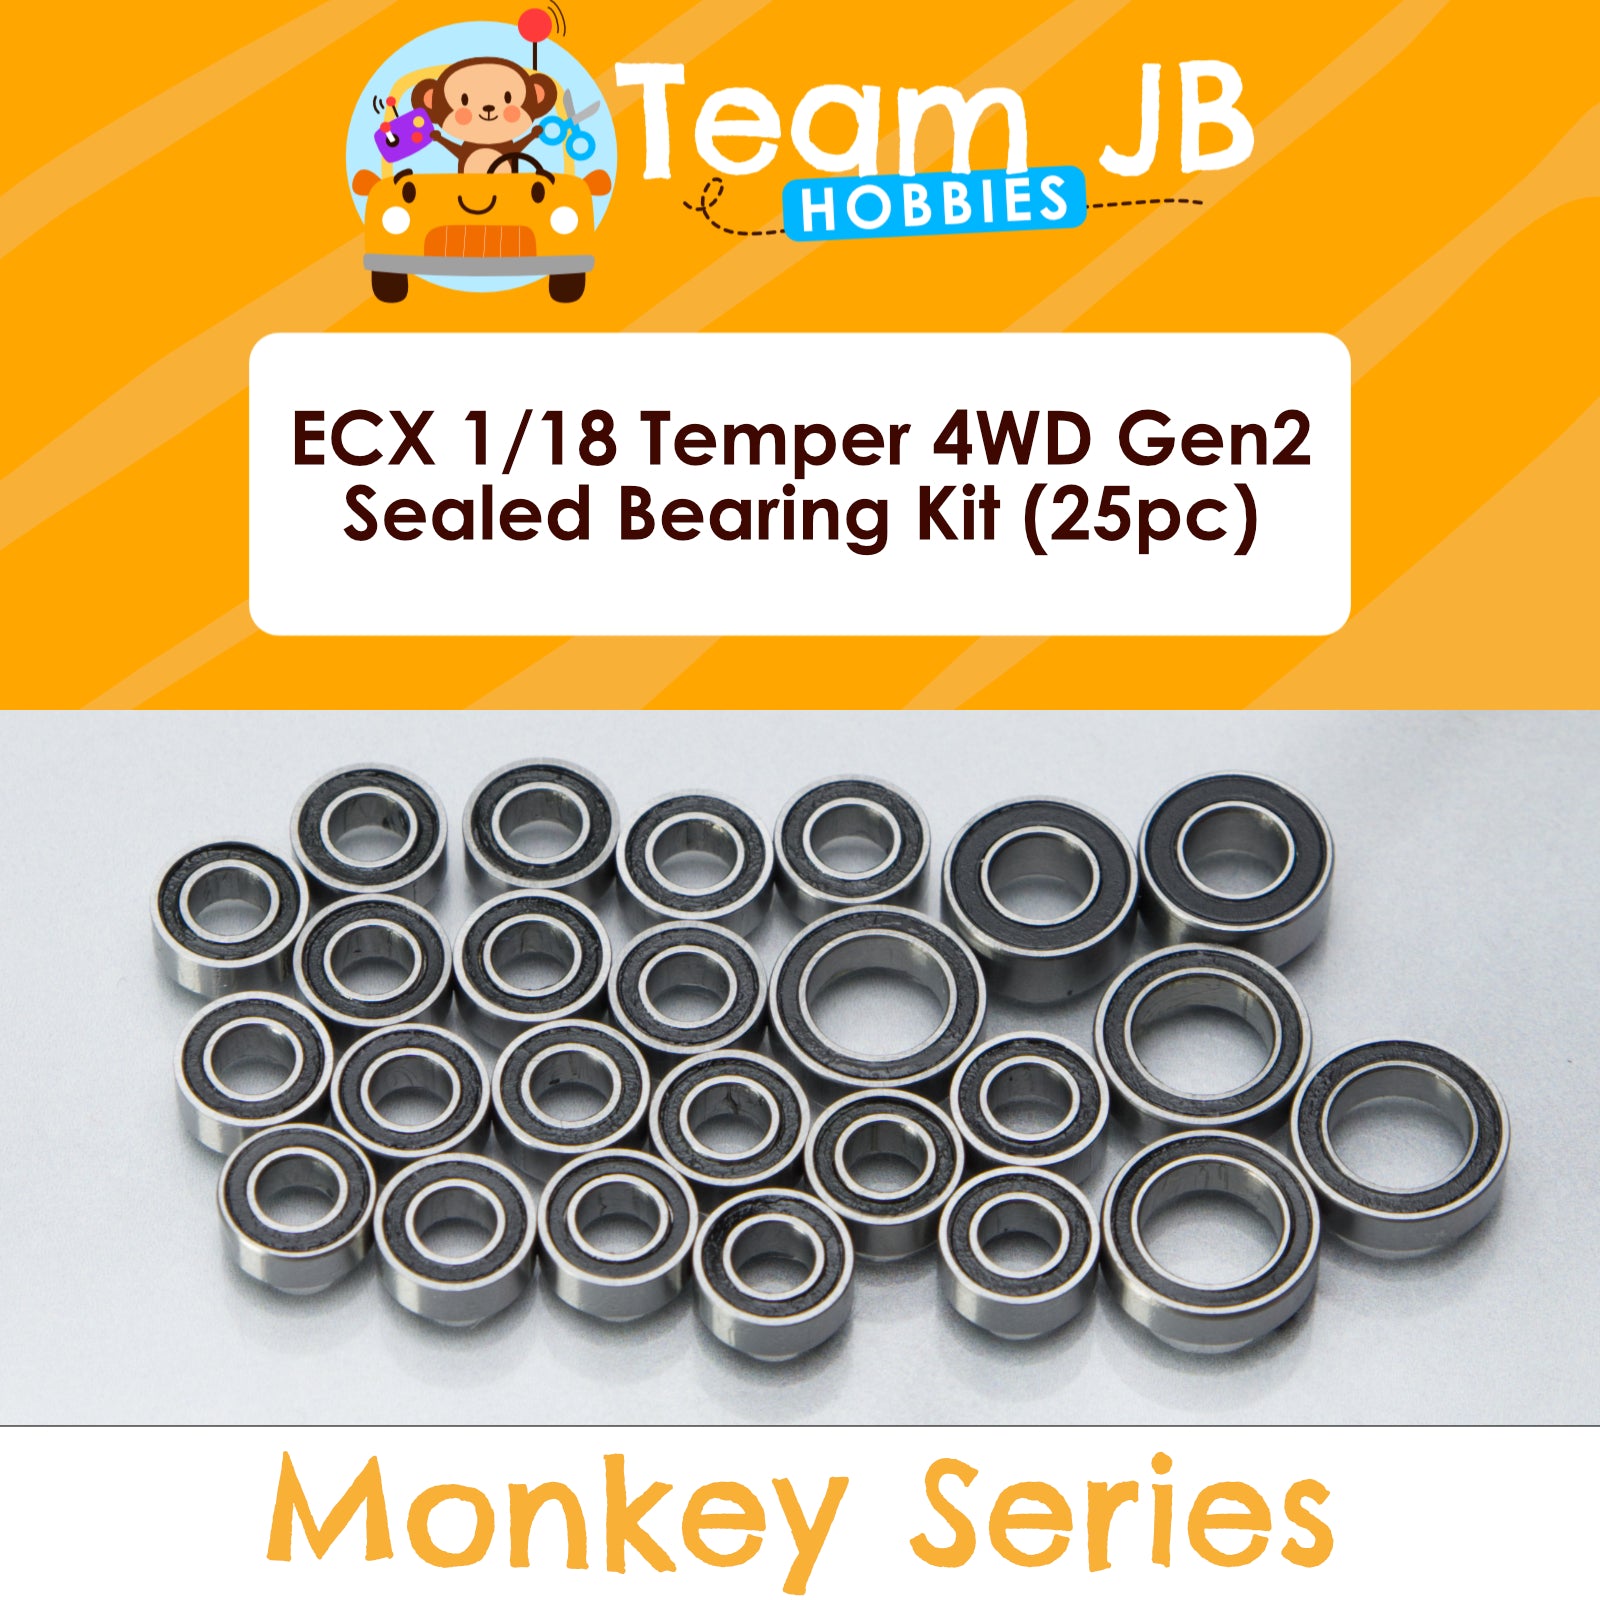 ECX 1/18 Temper 4WD Gen2 - Sealed Bearing Kit